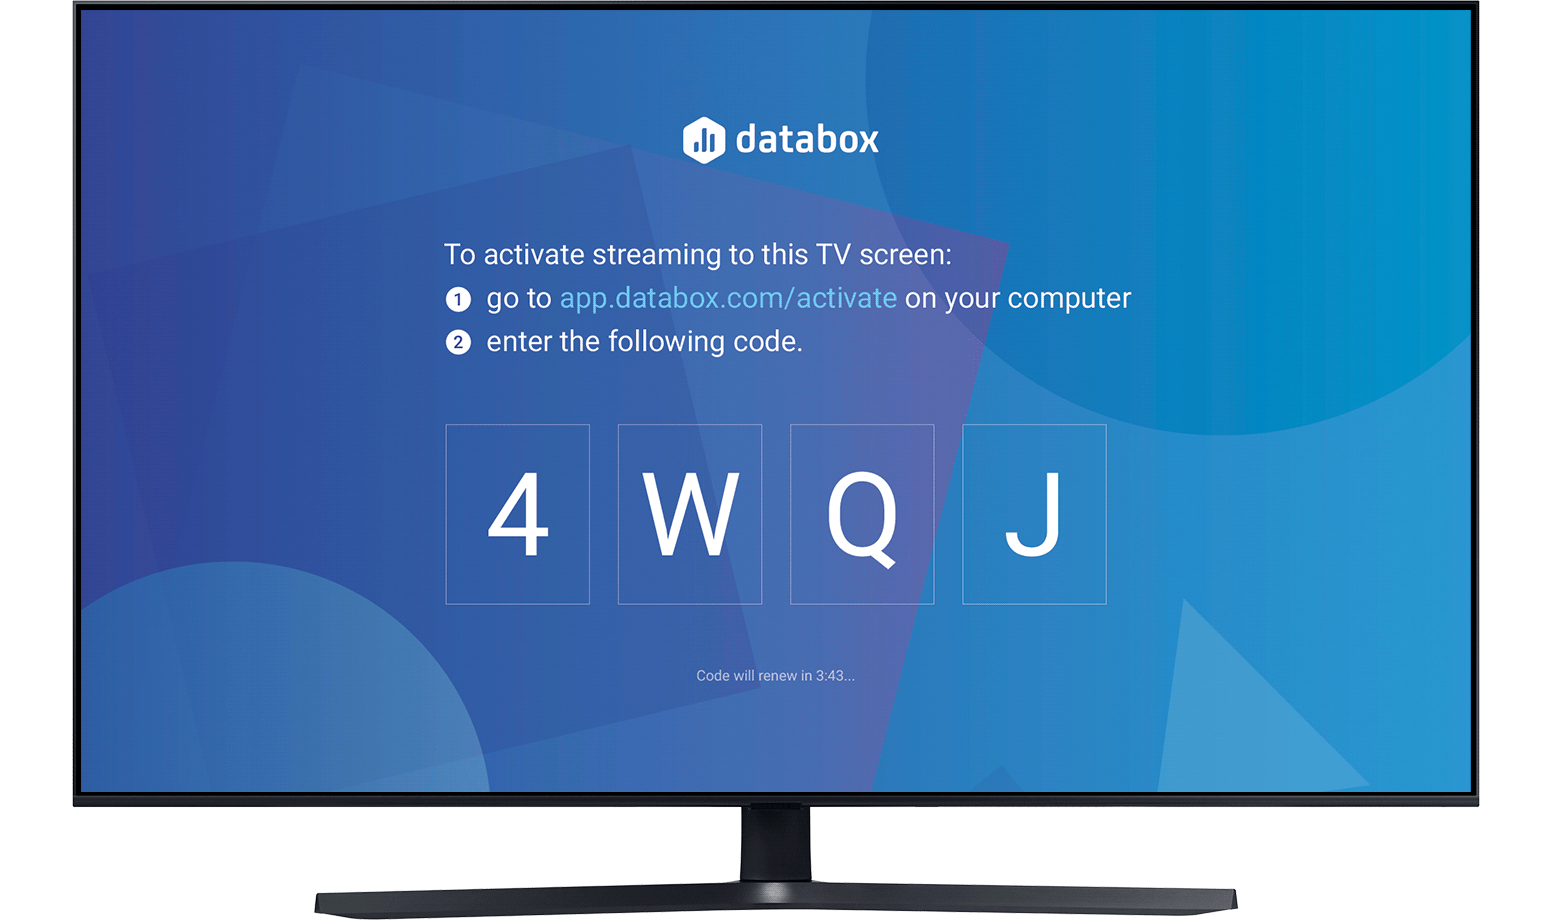 Visit tv.databox.com and receive your unique 4-digit code